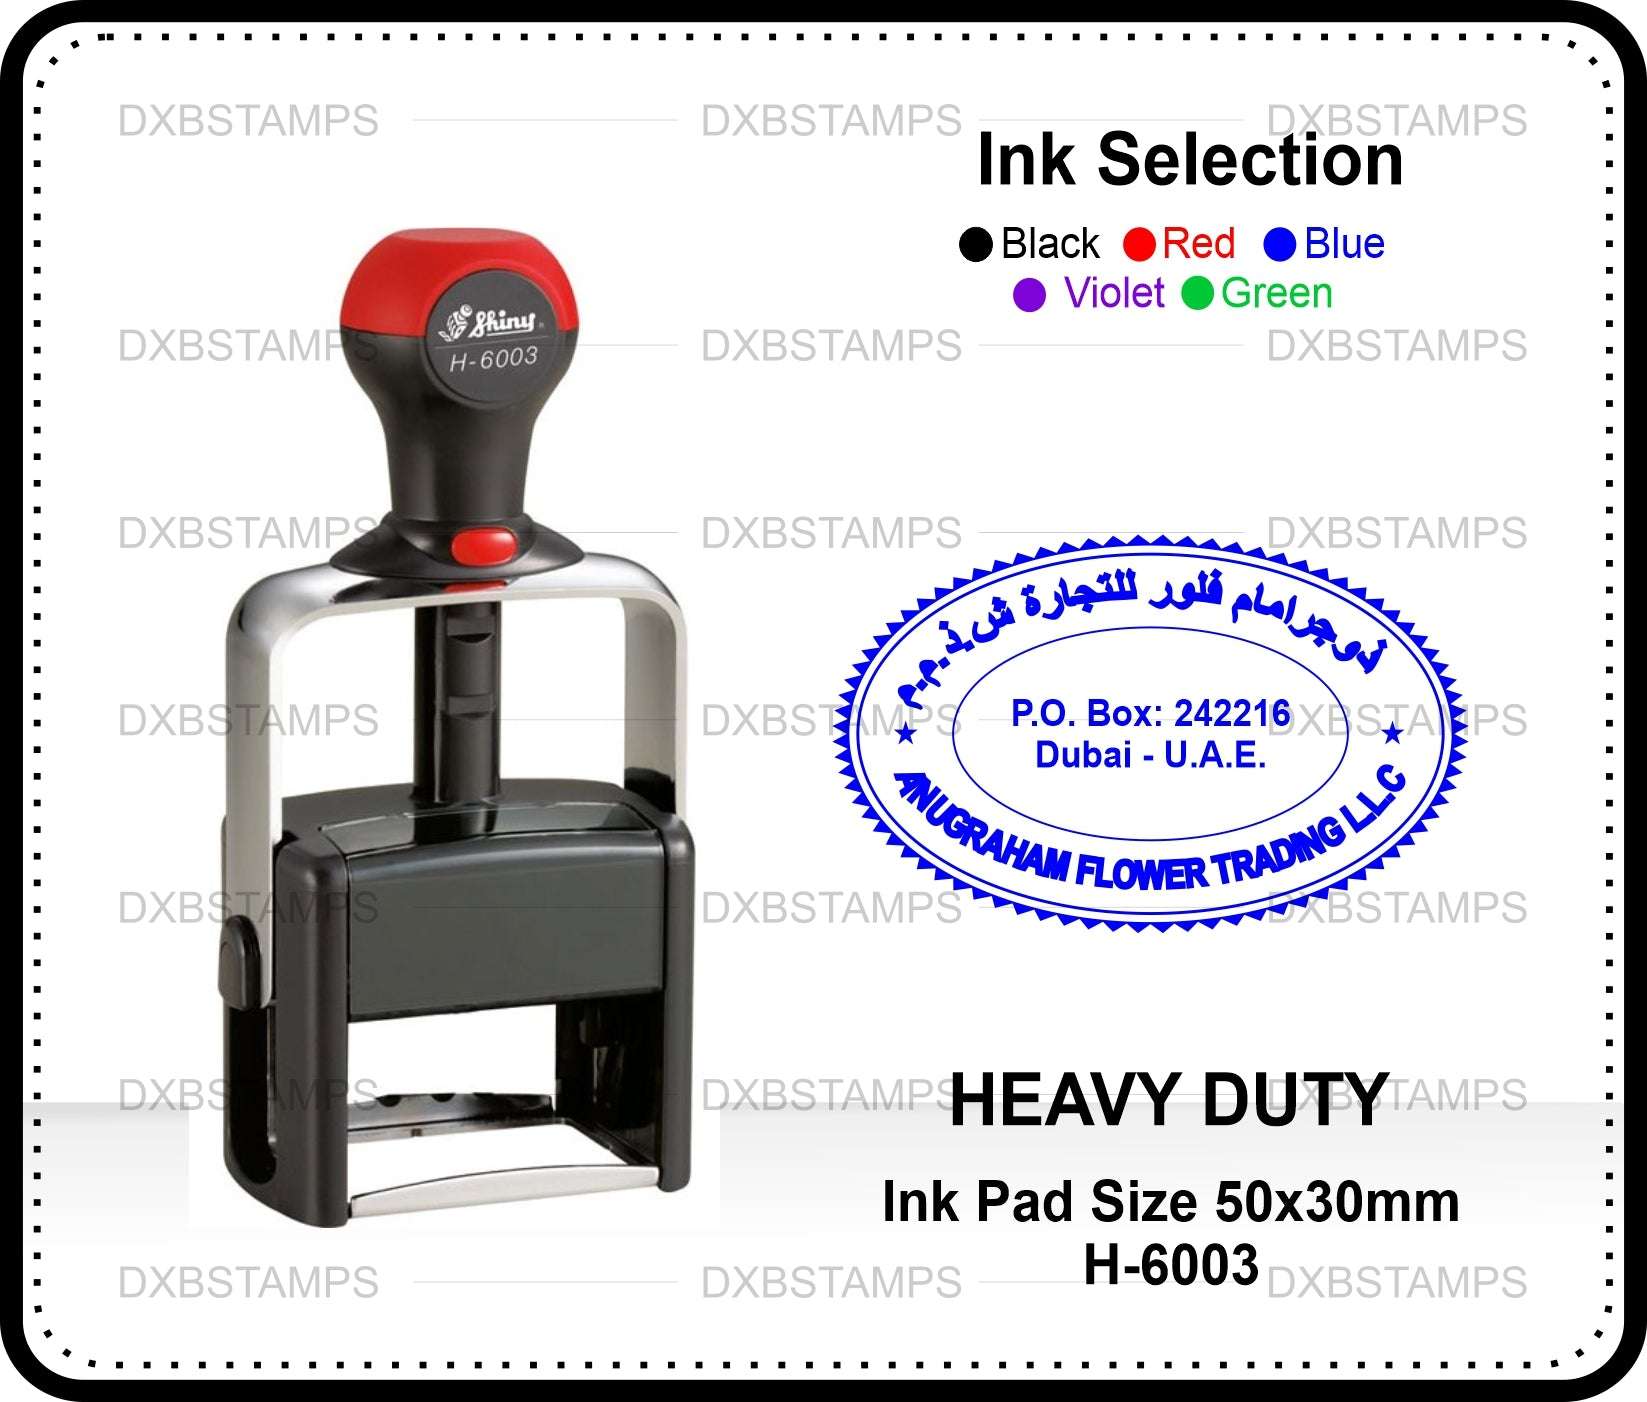 heavy duty stamp